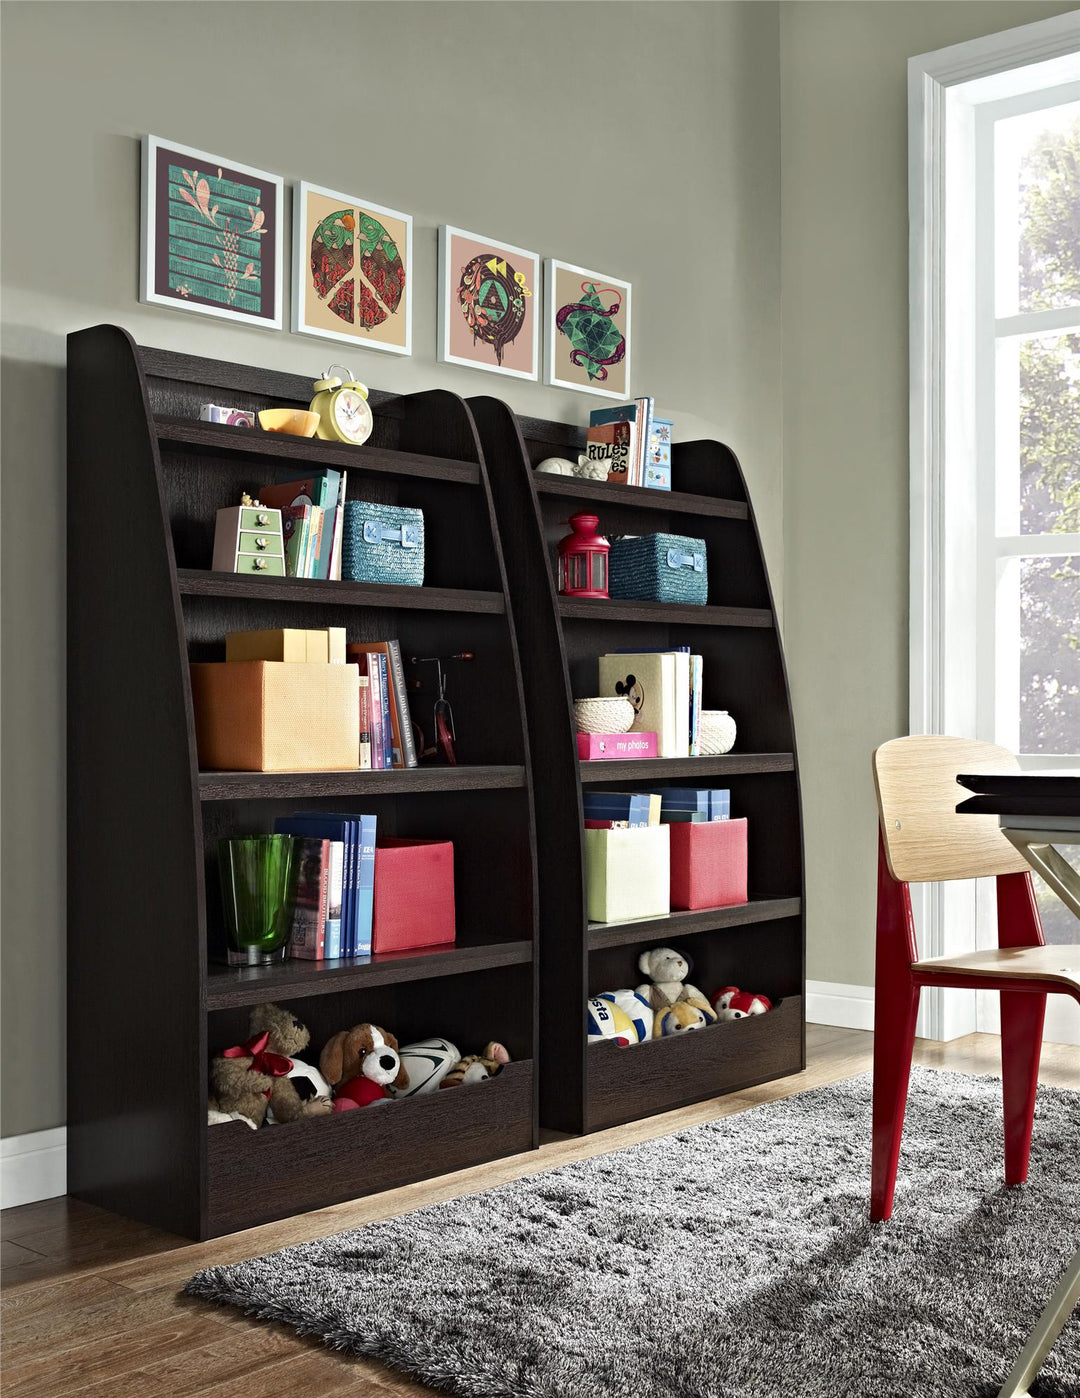 Ladder bookcase with toy storage for kids -  Espresso